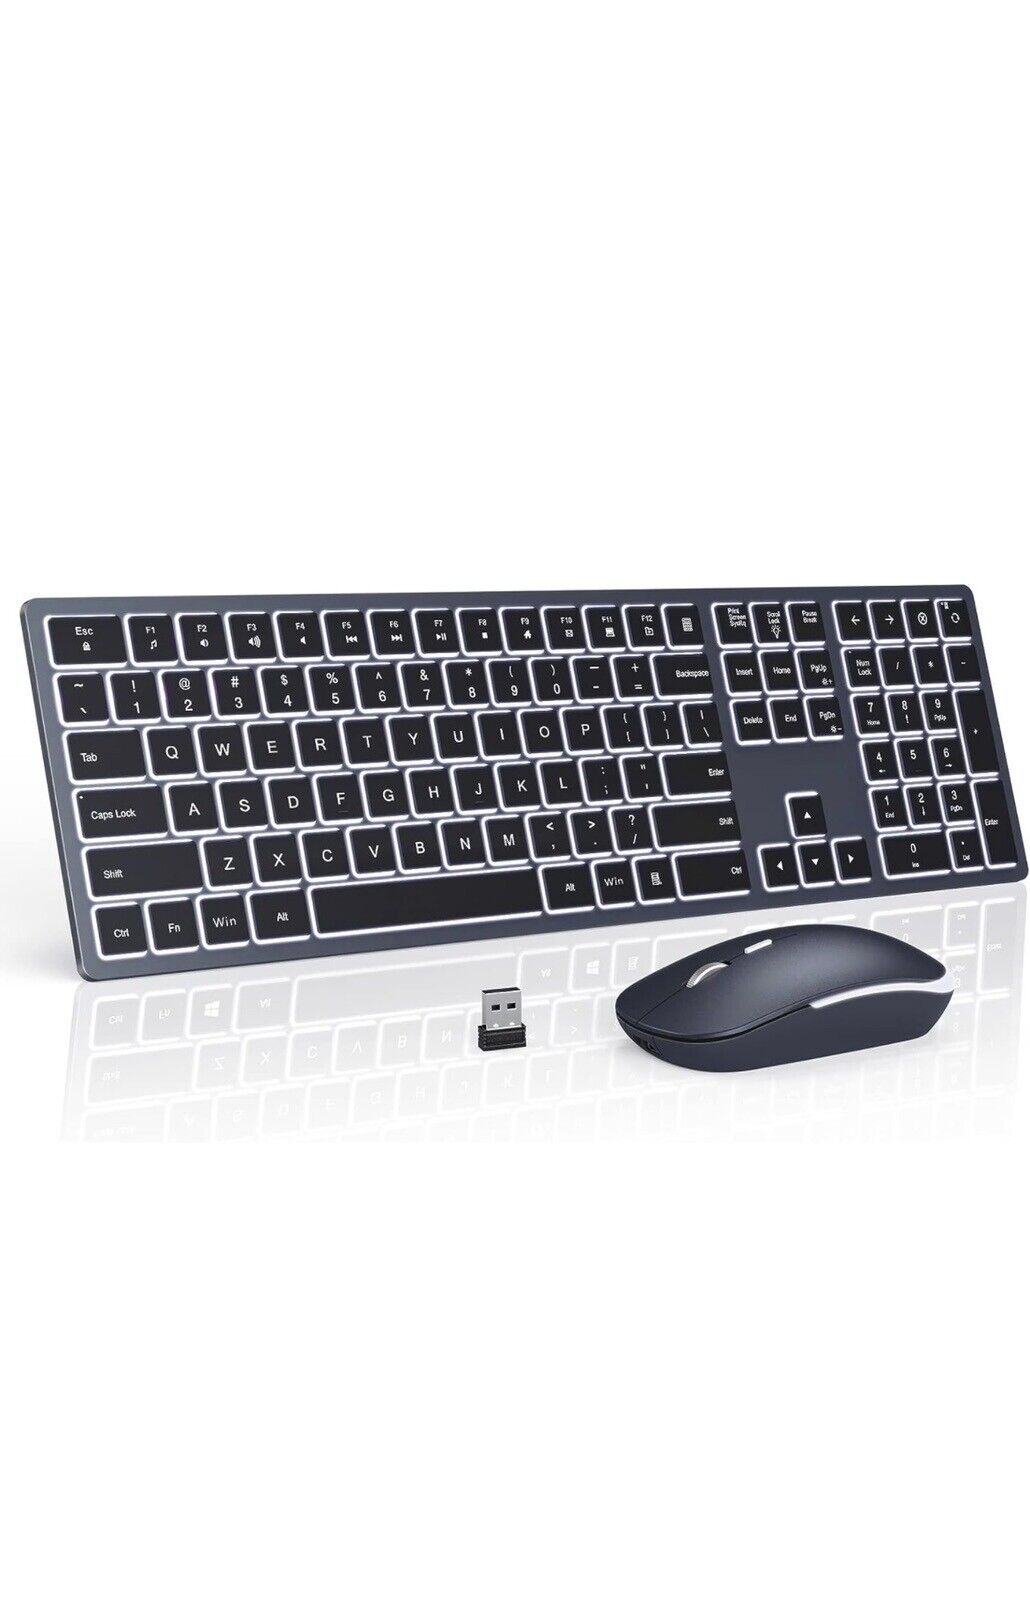 Seenda Wireless Backlit Keyboard & Mouse IWG-ZXK26TZ Ultra-thin Rechargeable New